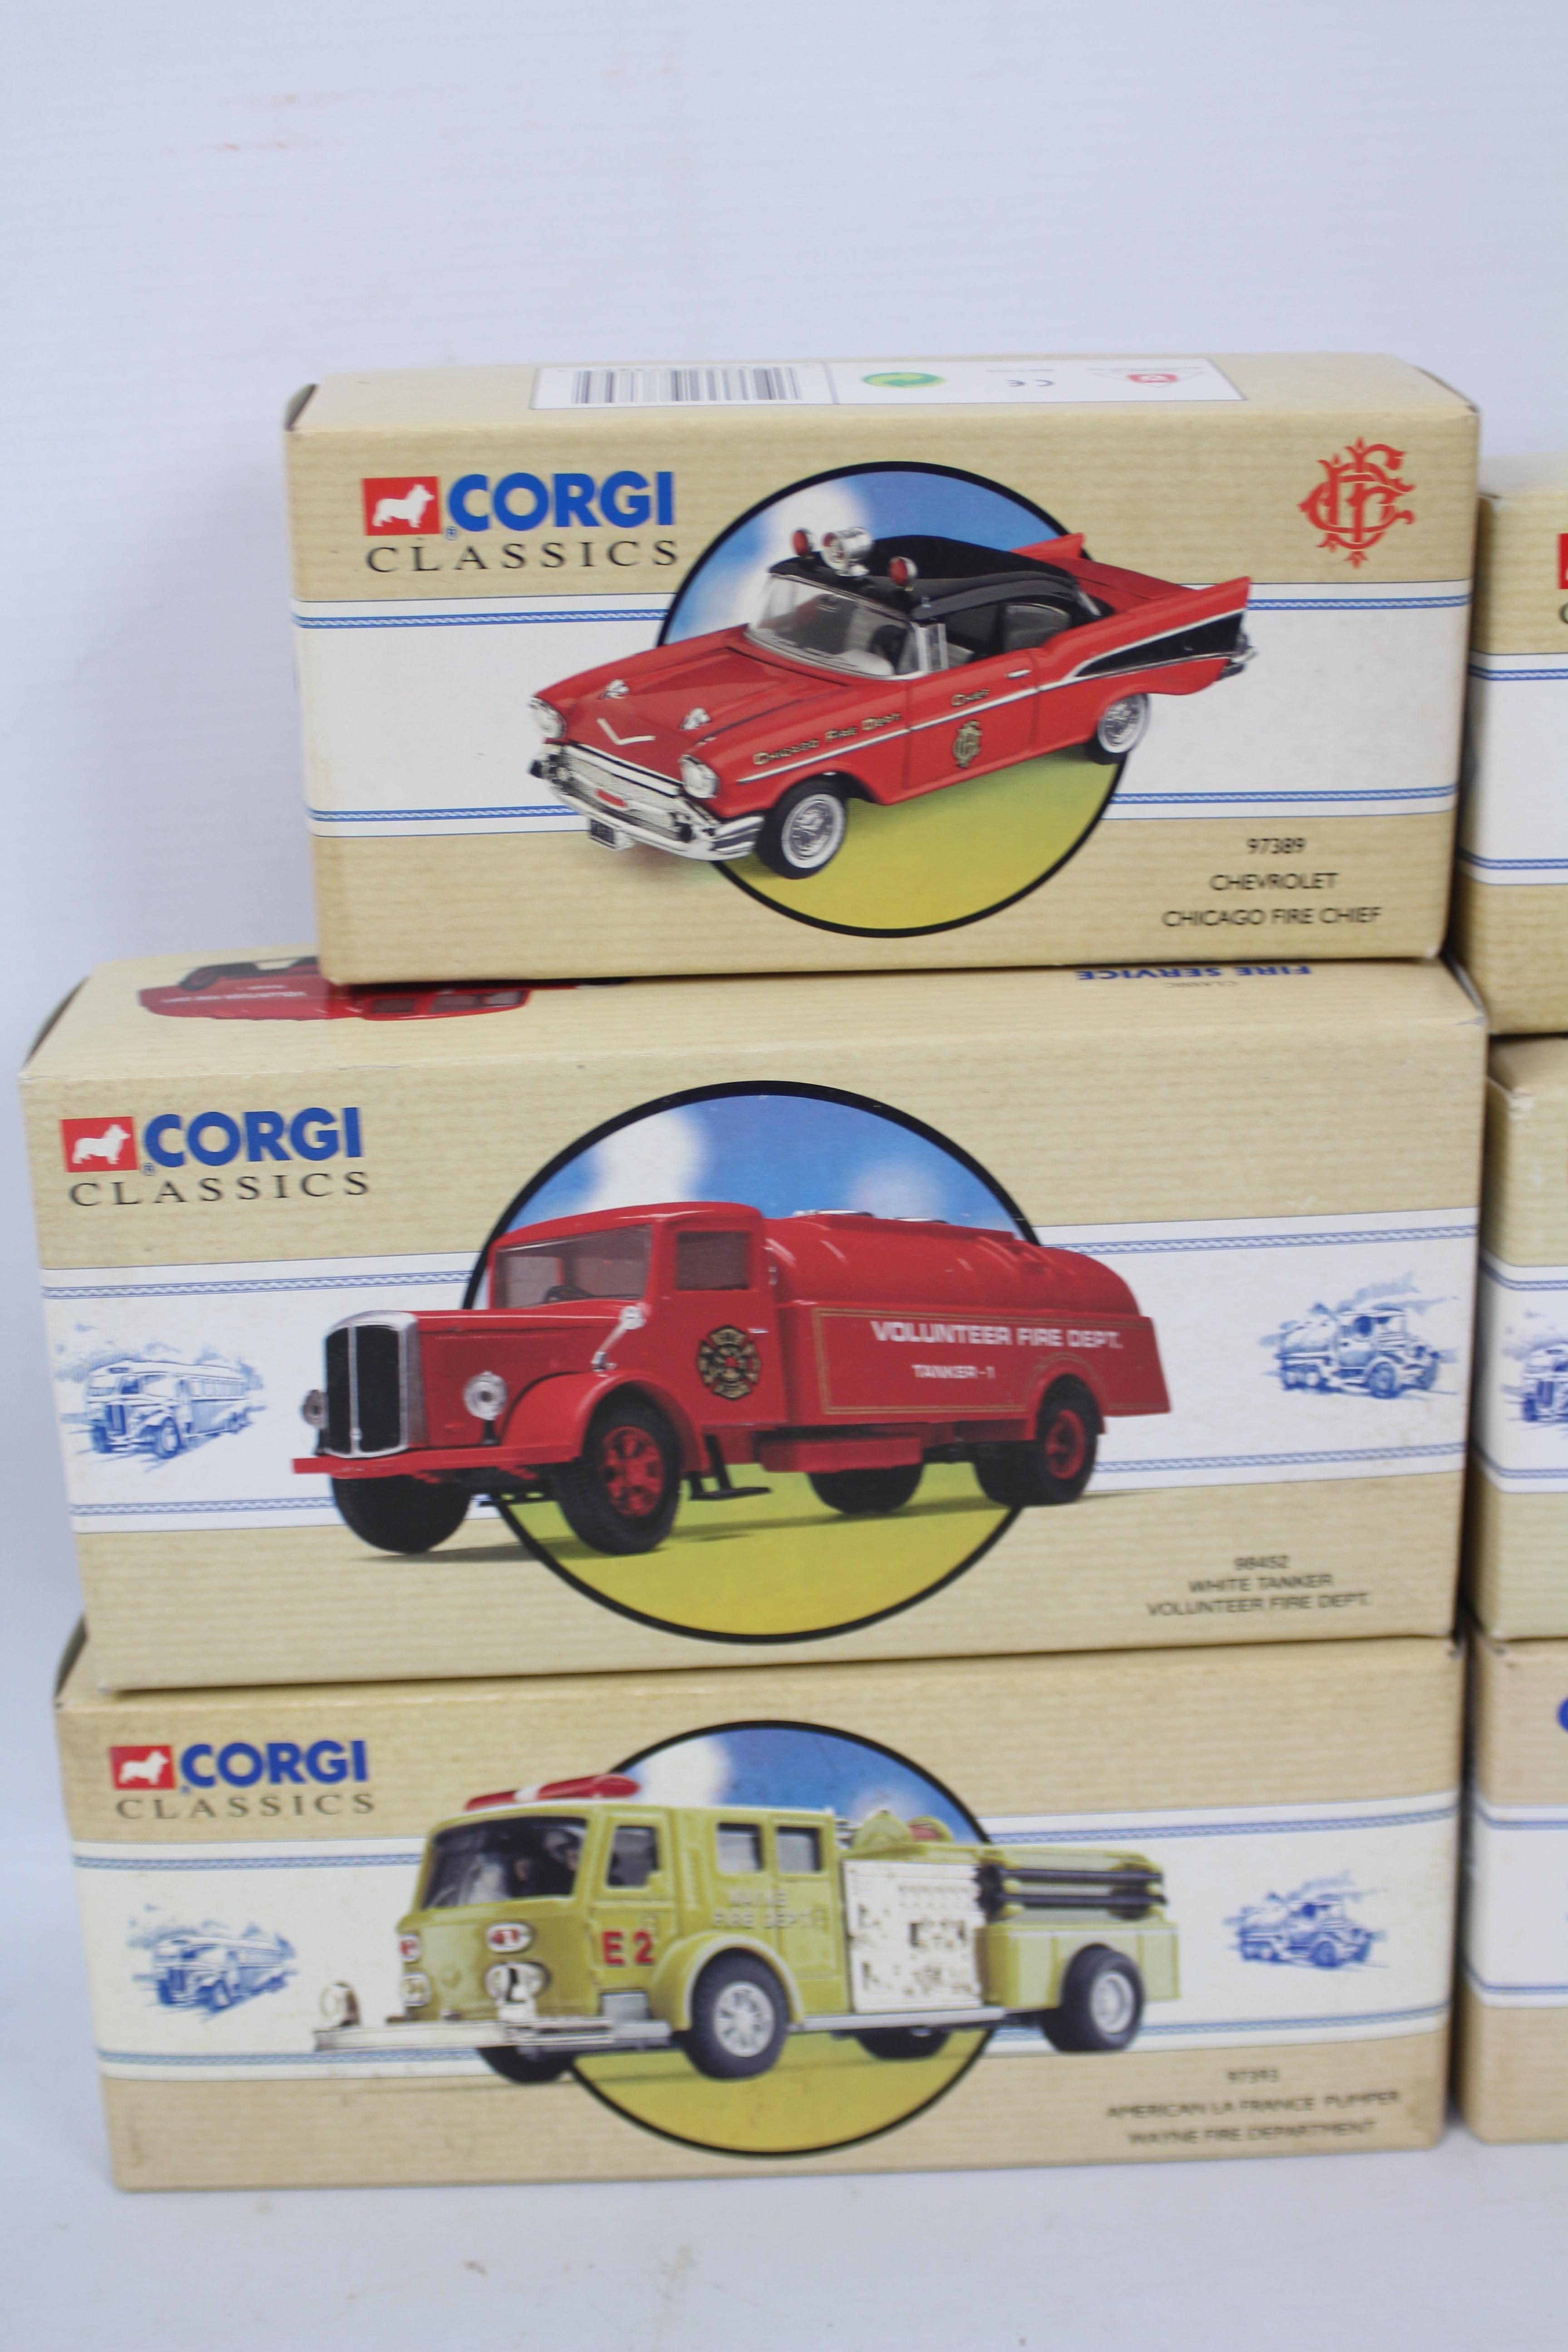 Corgi Classics - Six boxed diecast US Fire Appliances / vehicles from Corgi. - Image 2 of 4